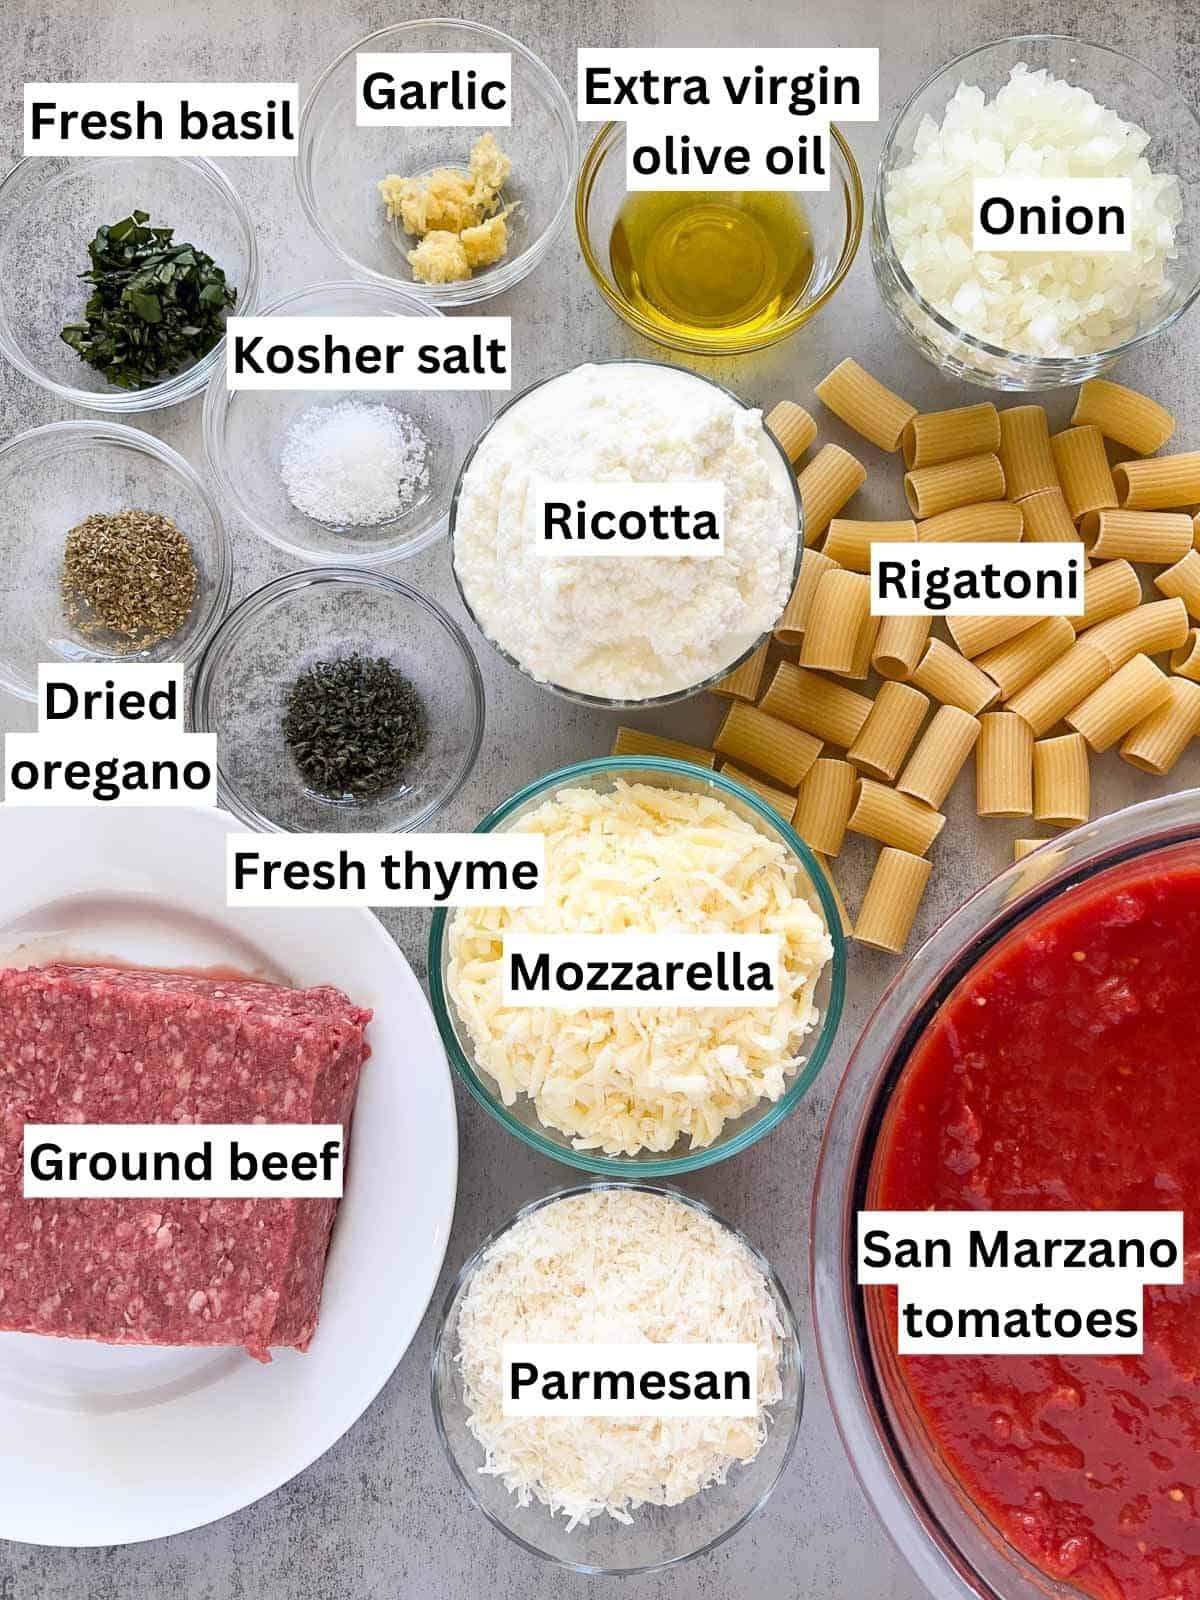 The ingredients to make rigatoni al forno.